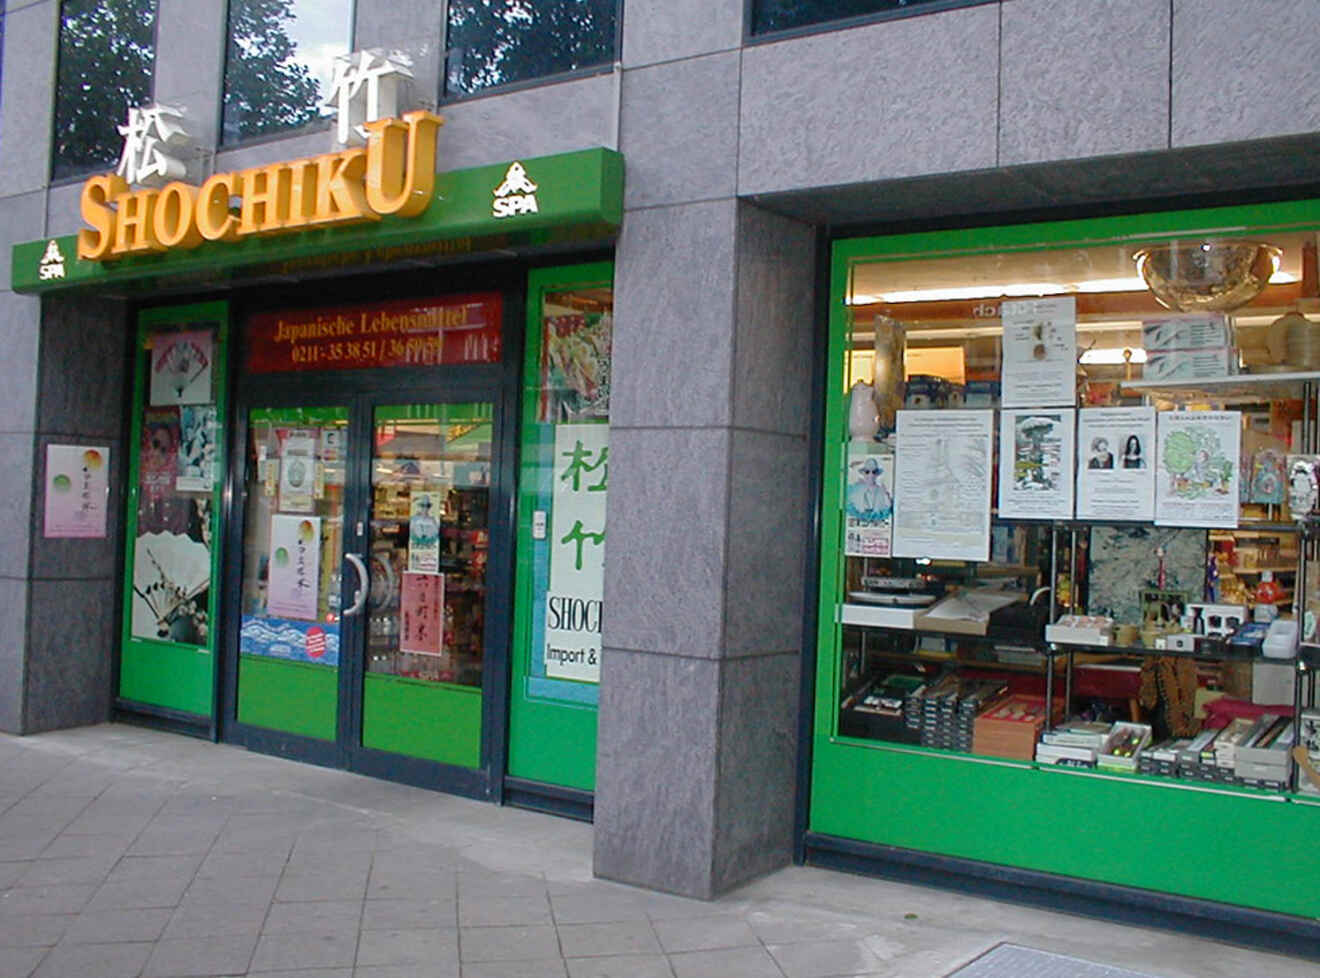 A shop in Little Tokyo